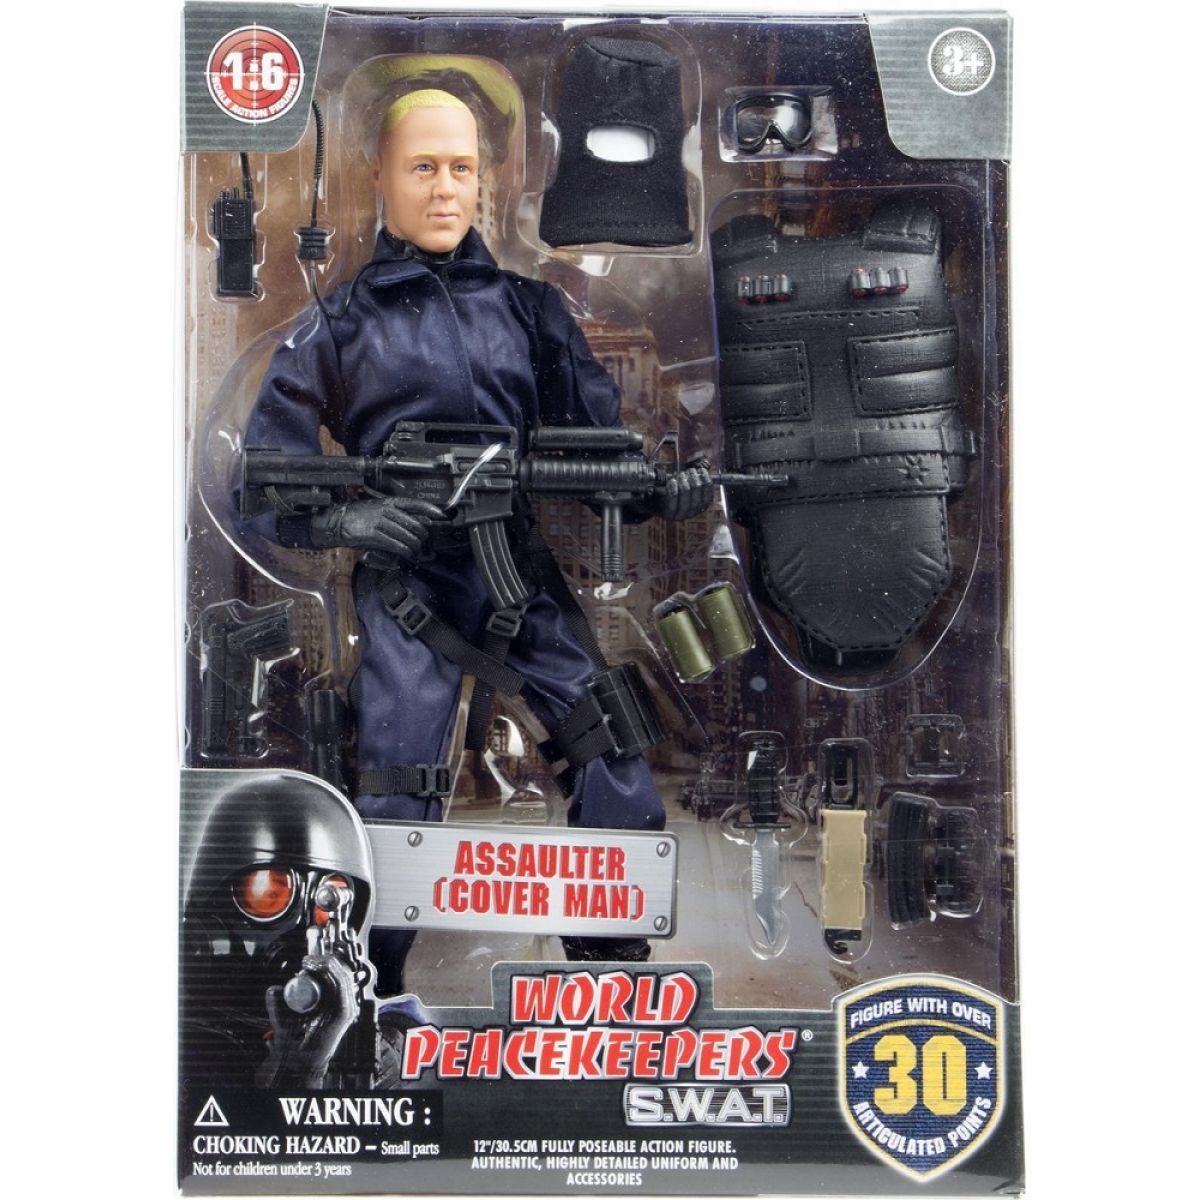 World Peacekeepers SWAT 30,5 cm Assaulter Cover Man